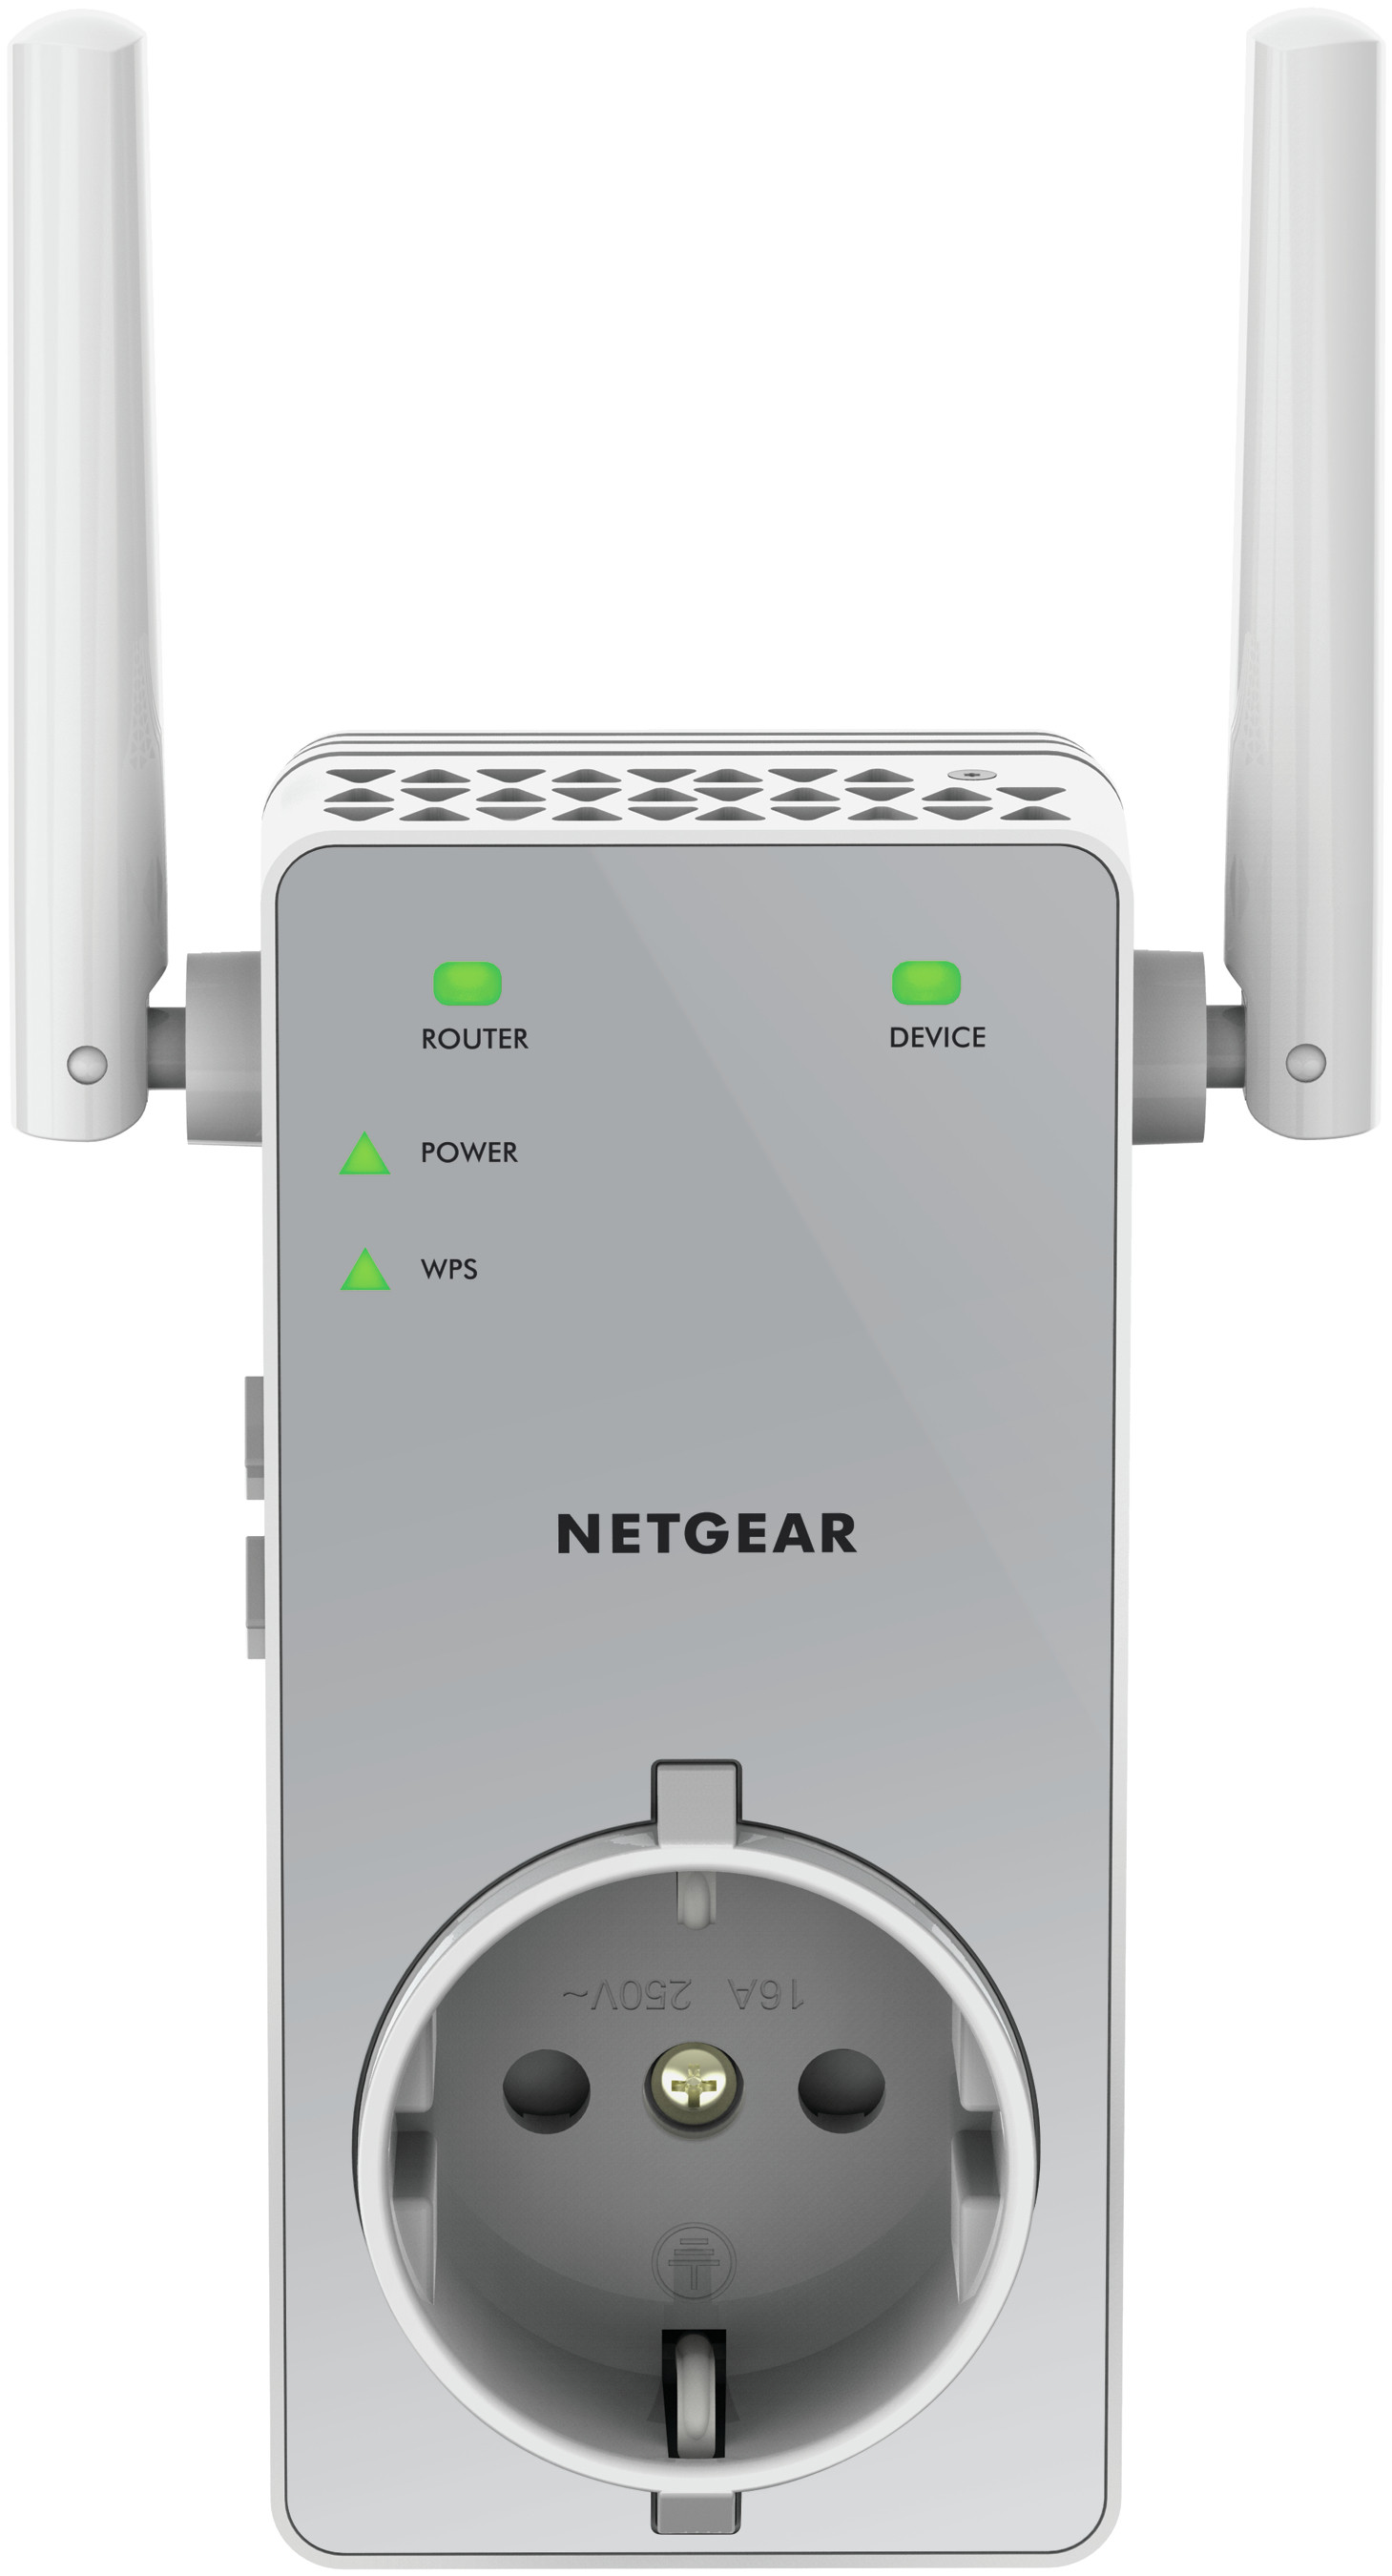 Netgear EX3800 Repetidor WiFi AC750, amplificador WiFi doble banda Caja Abierta